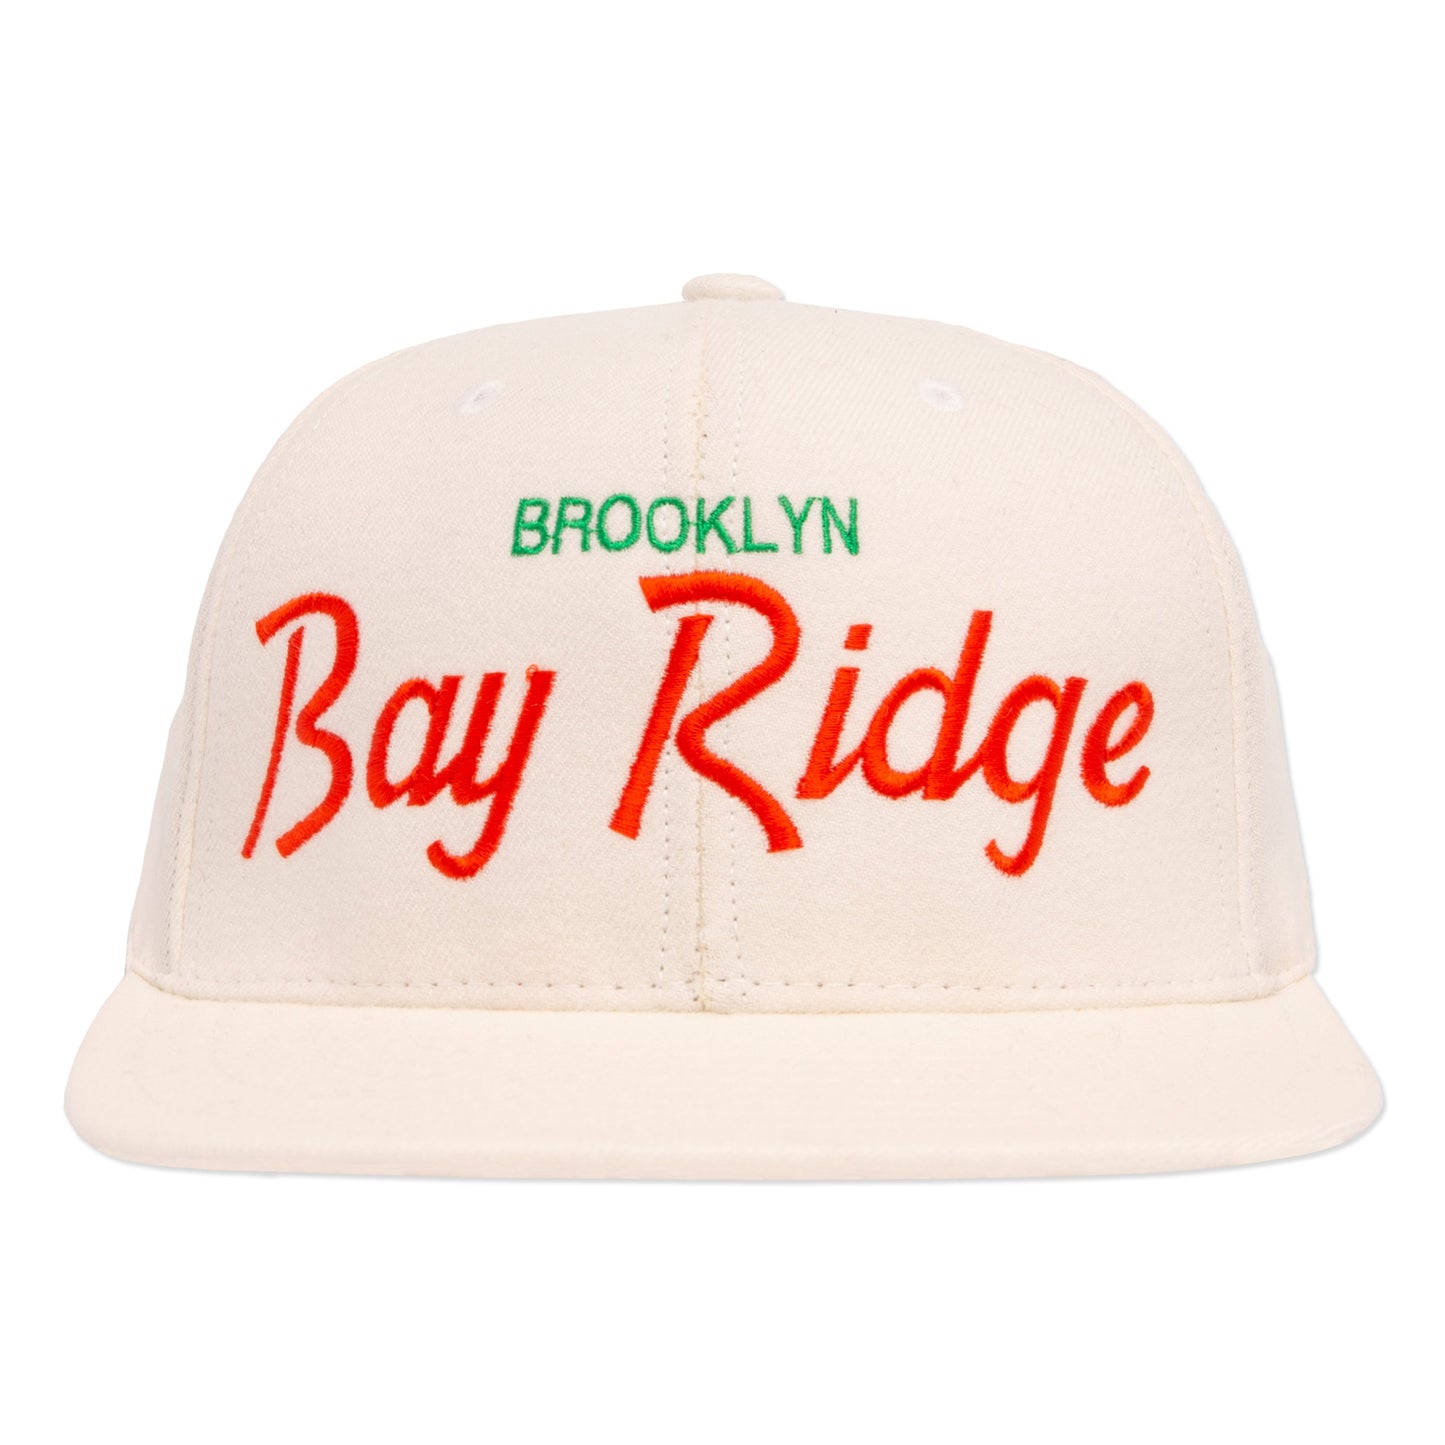 Bay Ridge Snapback Hat